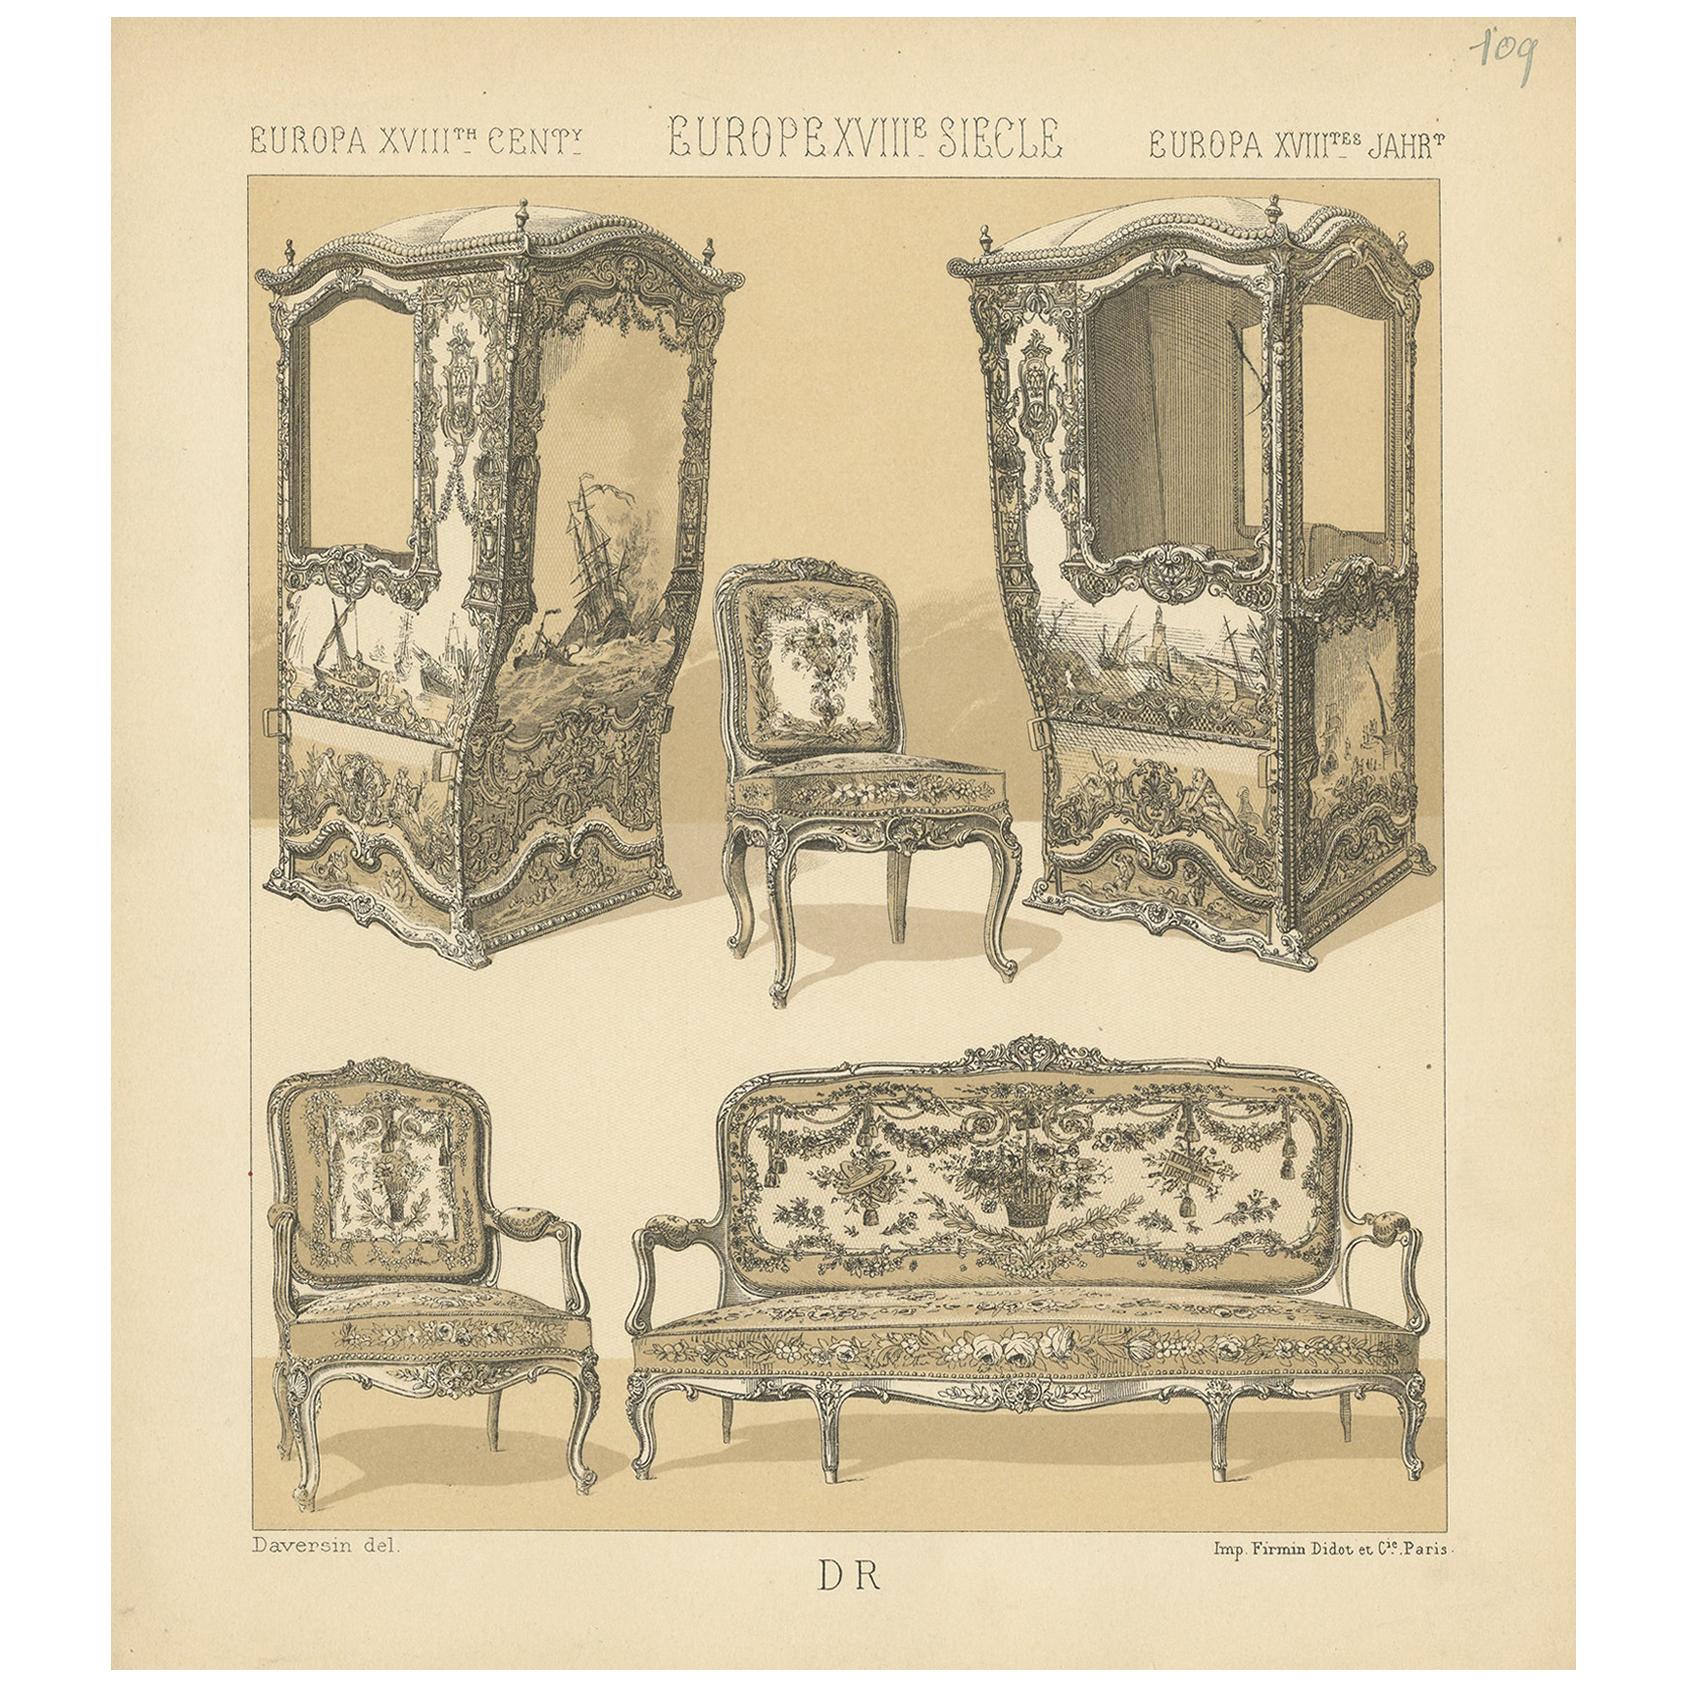 Pl. 109 Antique Print of European XVIIIth Century Furniture by Racinet